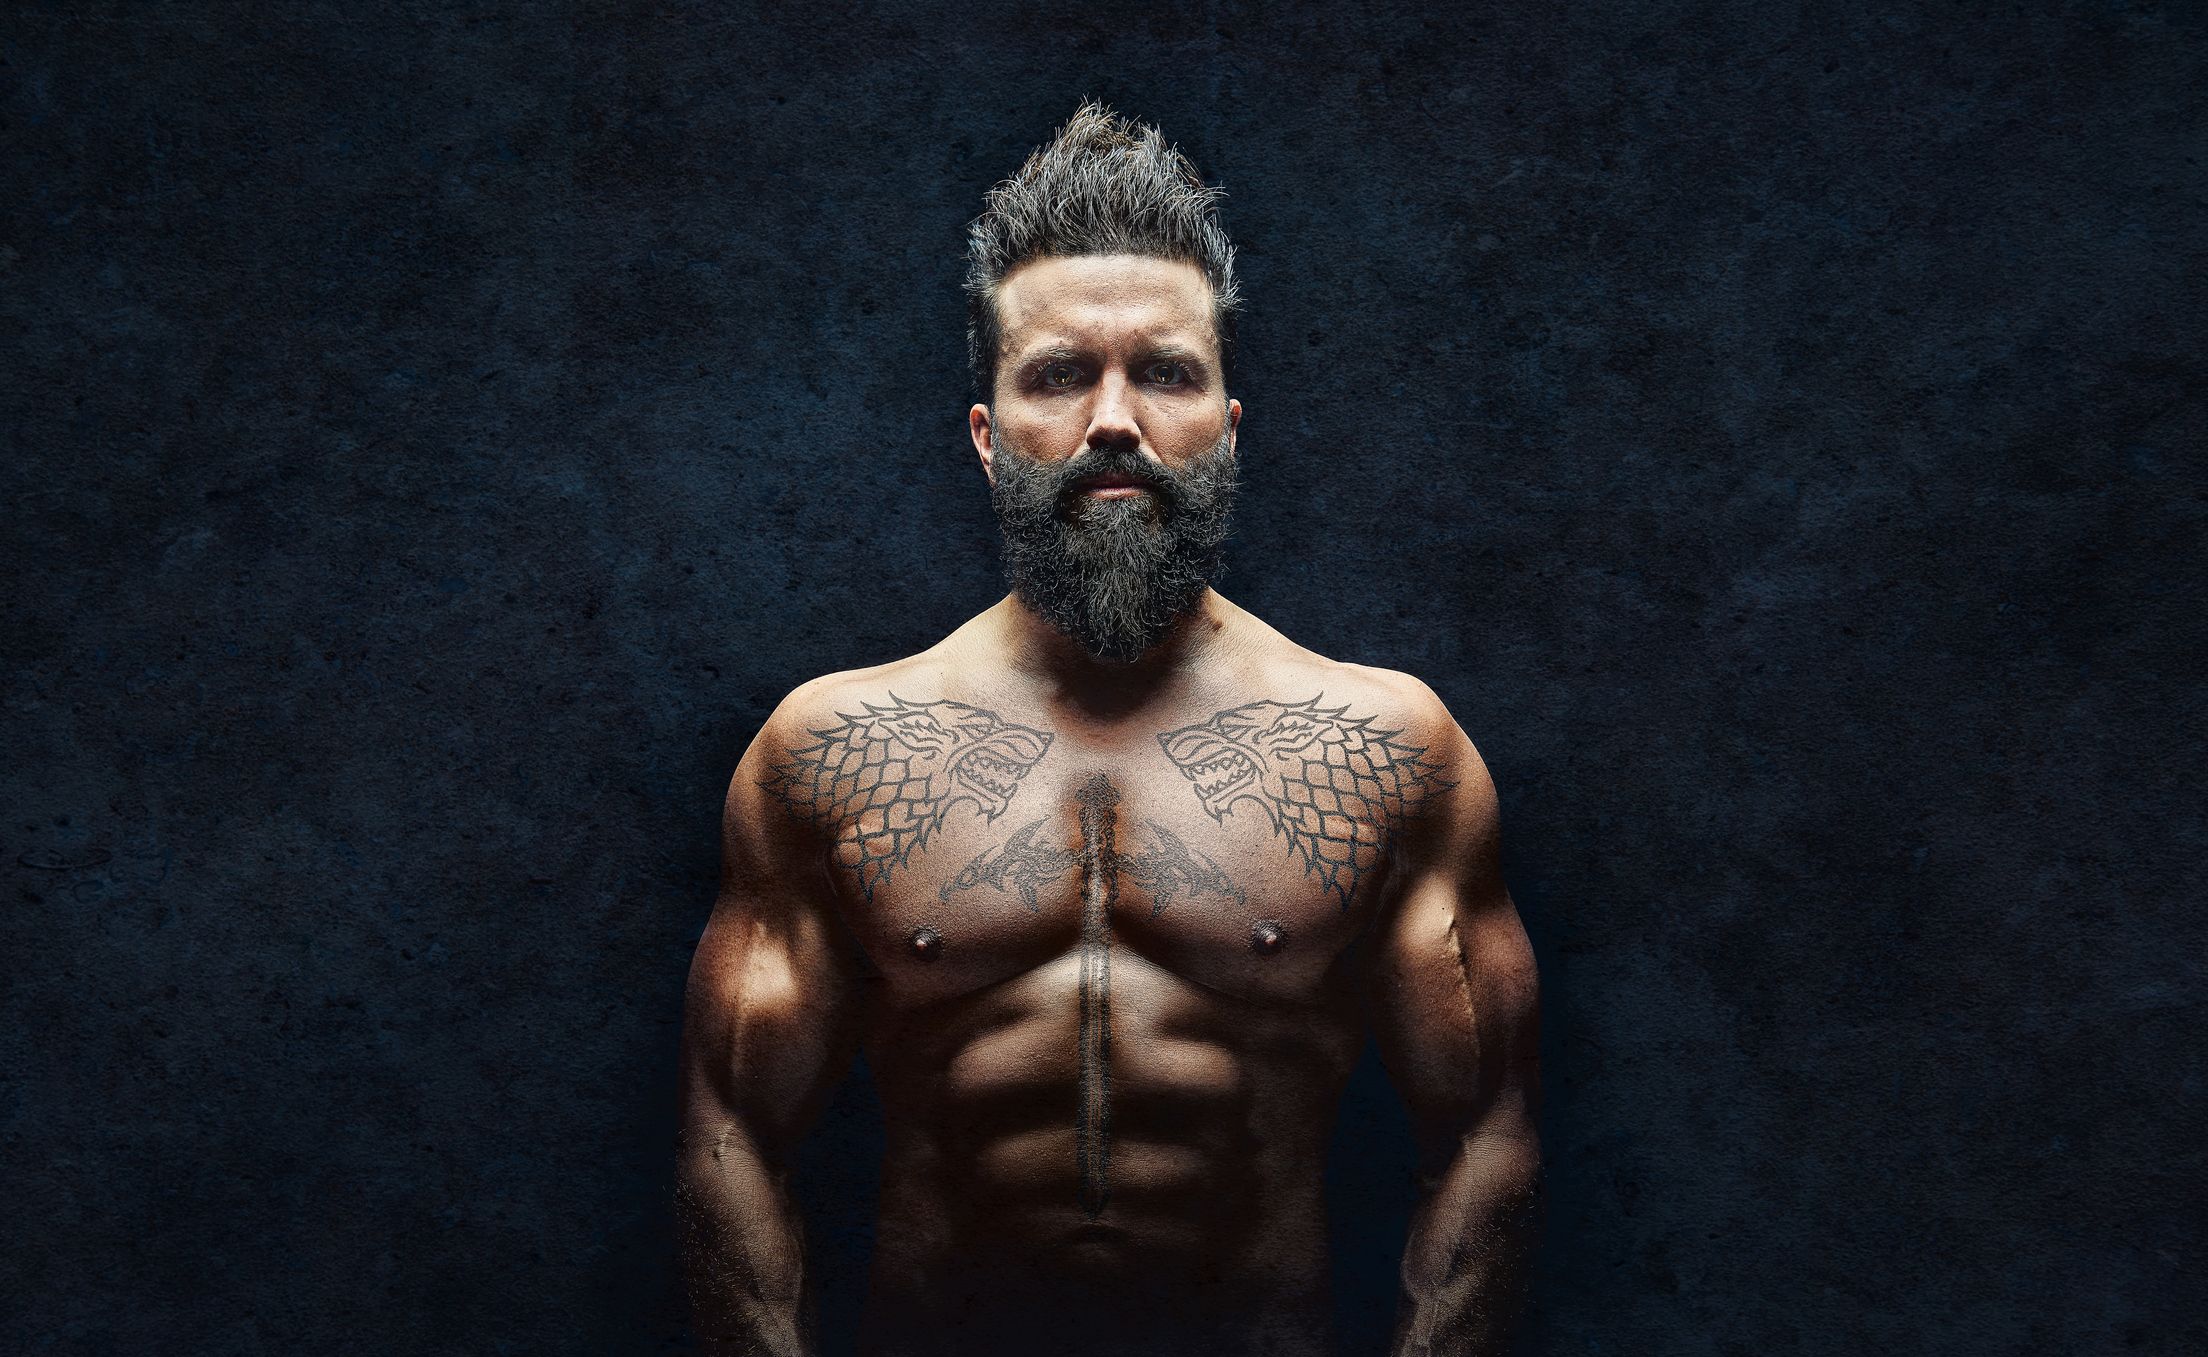 Rib Tattoos for Men 30 Inspirational Designs for Your Next Tattoo  100  Tattoos